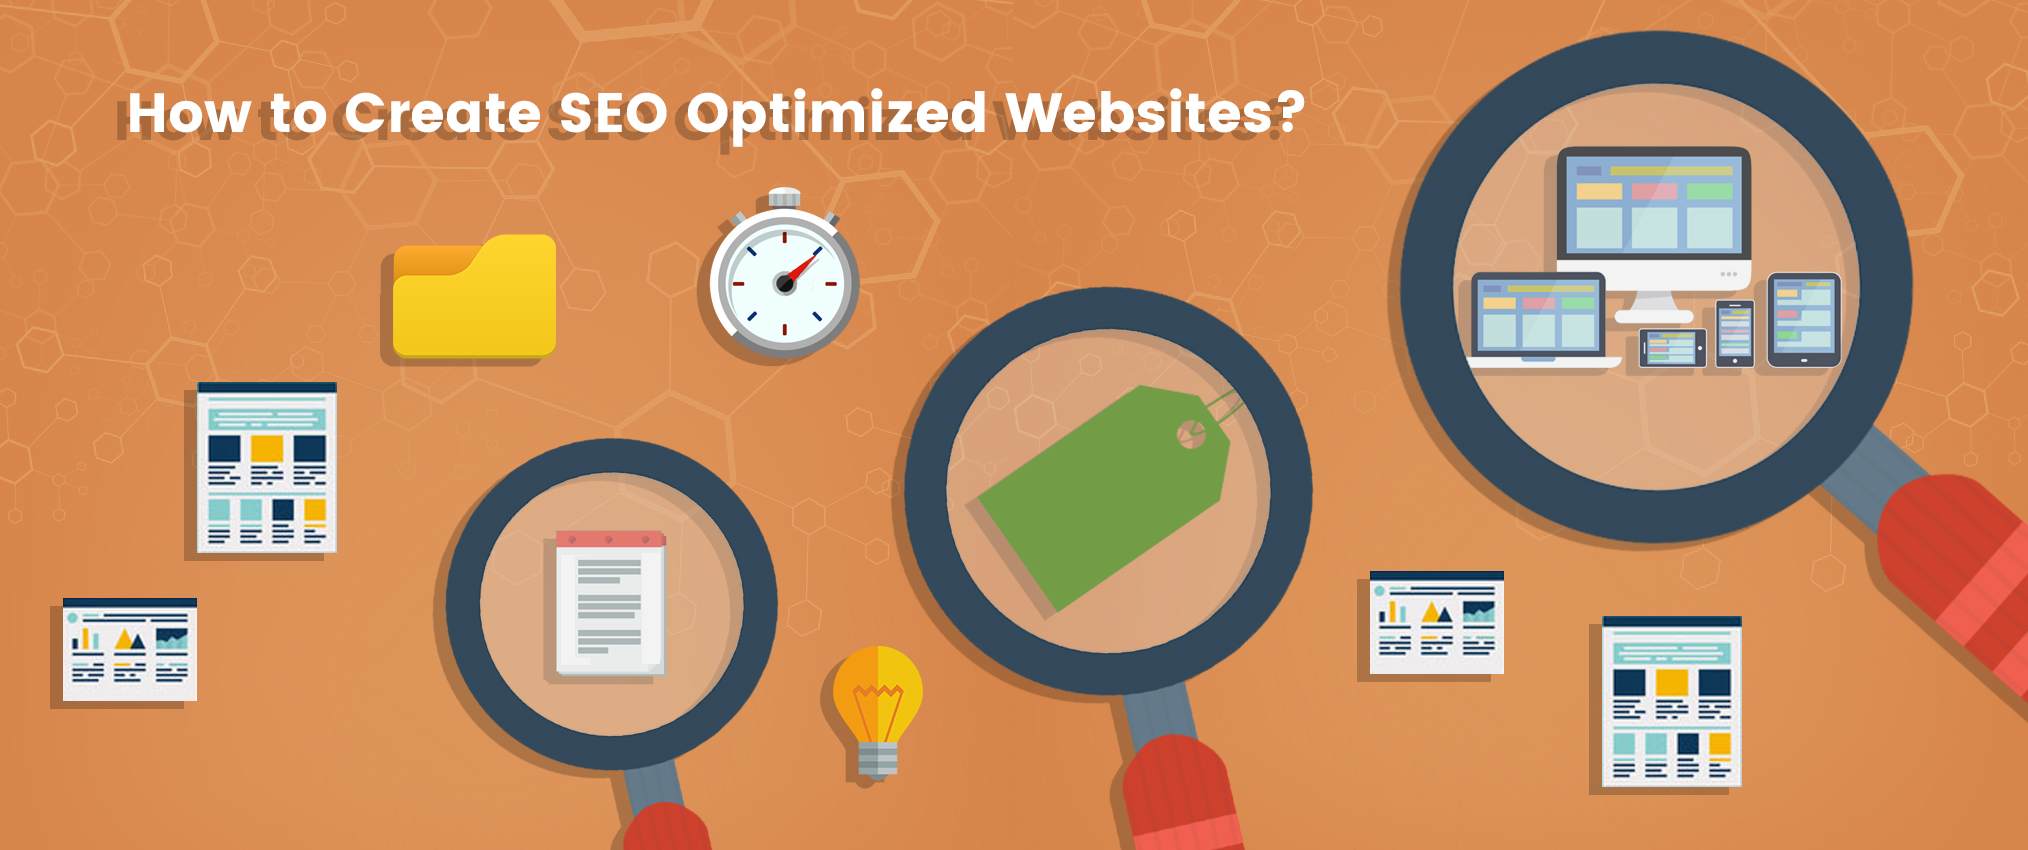 how-to-create-seo-optimized-websites